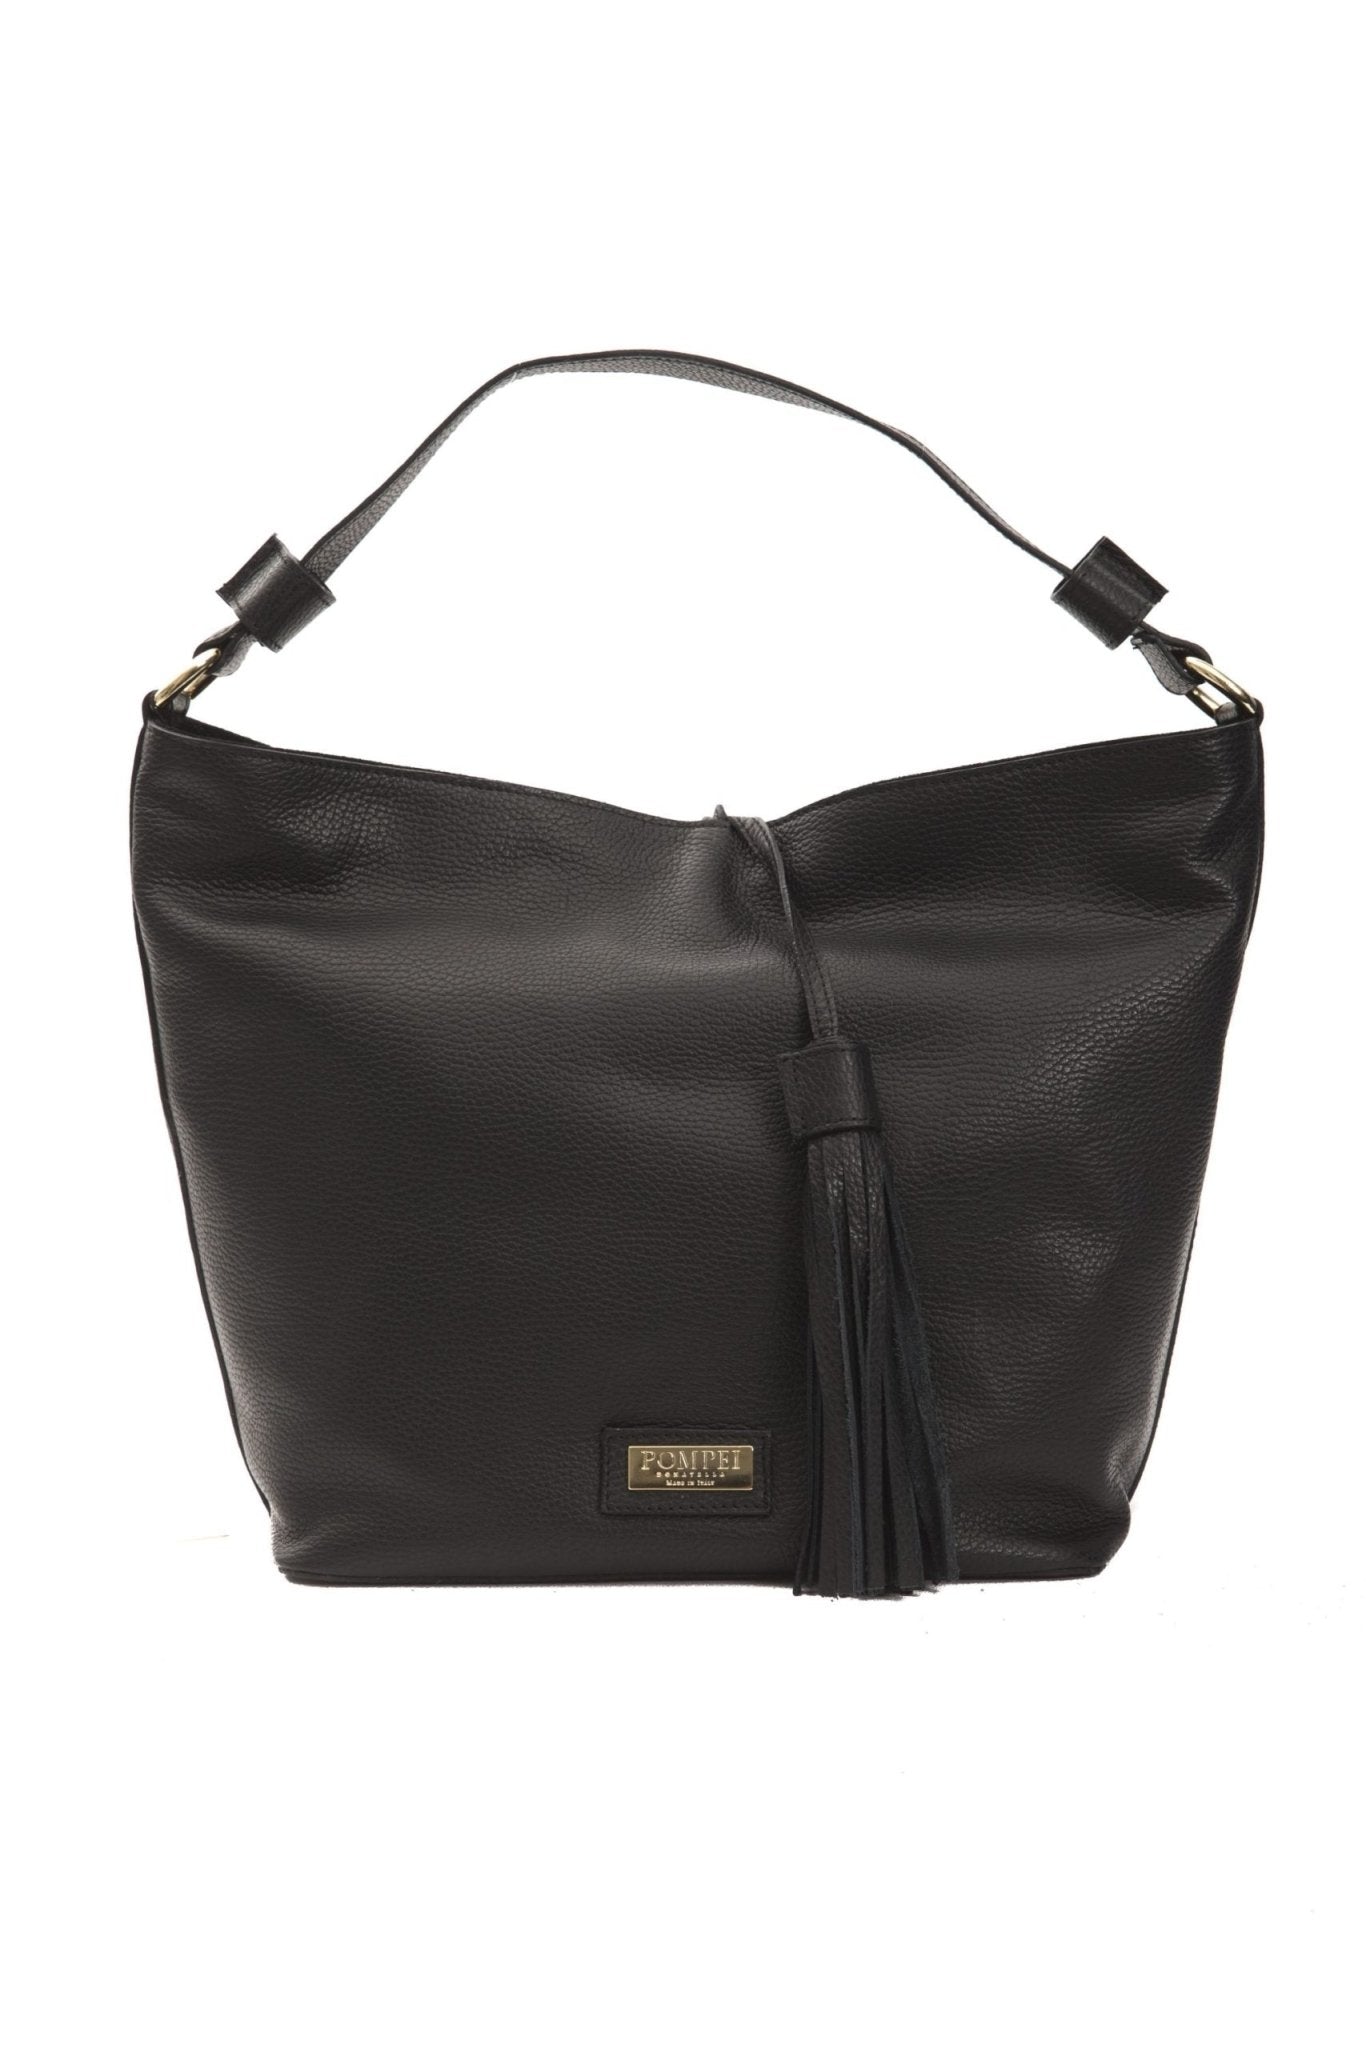 Pompei Donatella Black Leather Shoulder Bag - Fizigo